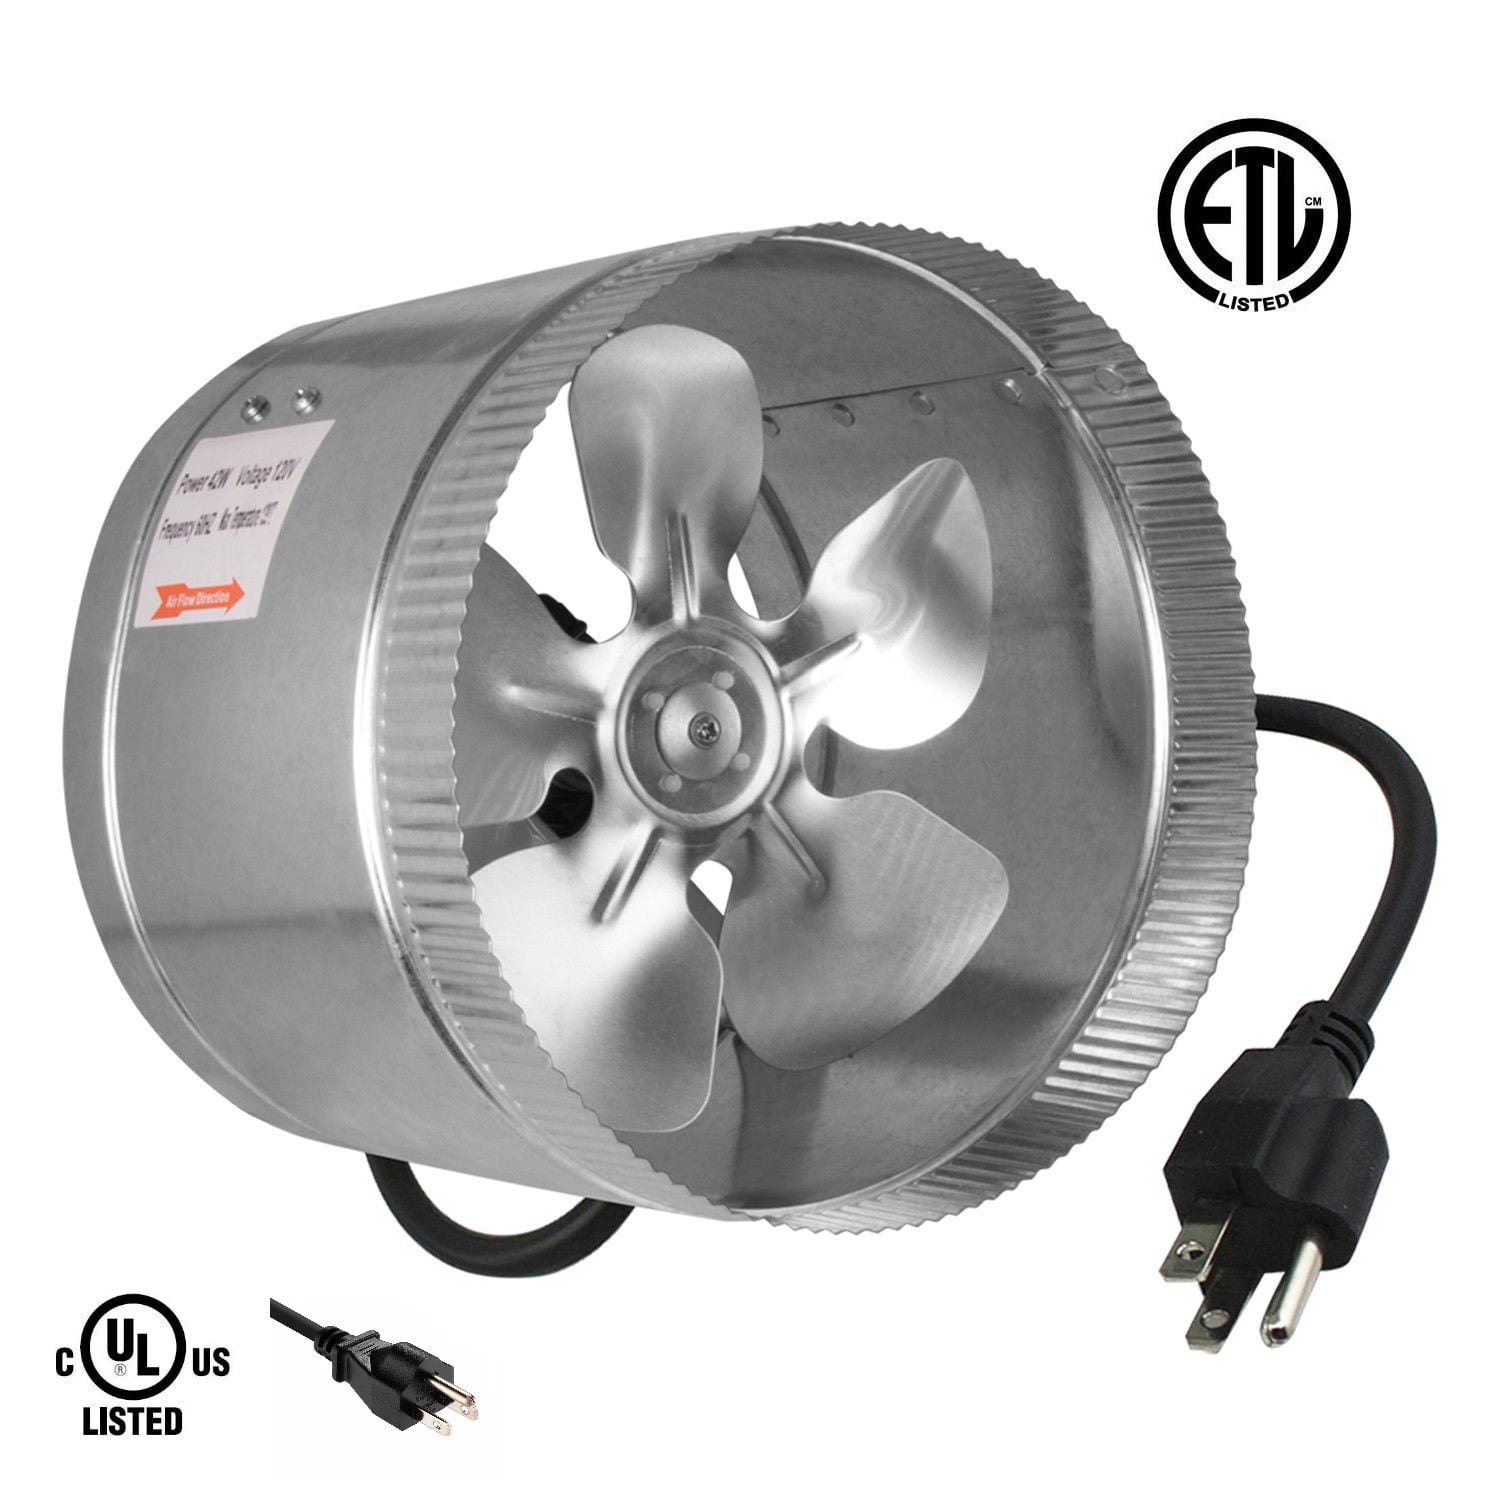 iPower ETL Certified 8" Inch Booster Fan Inline Duct Vent Exhaust Intake Blower 